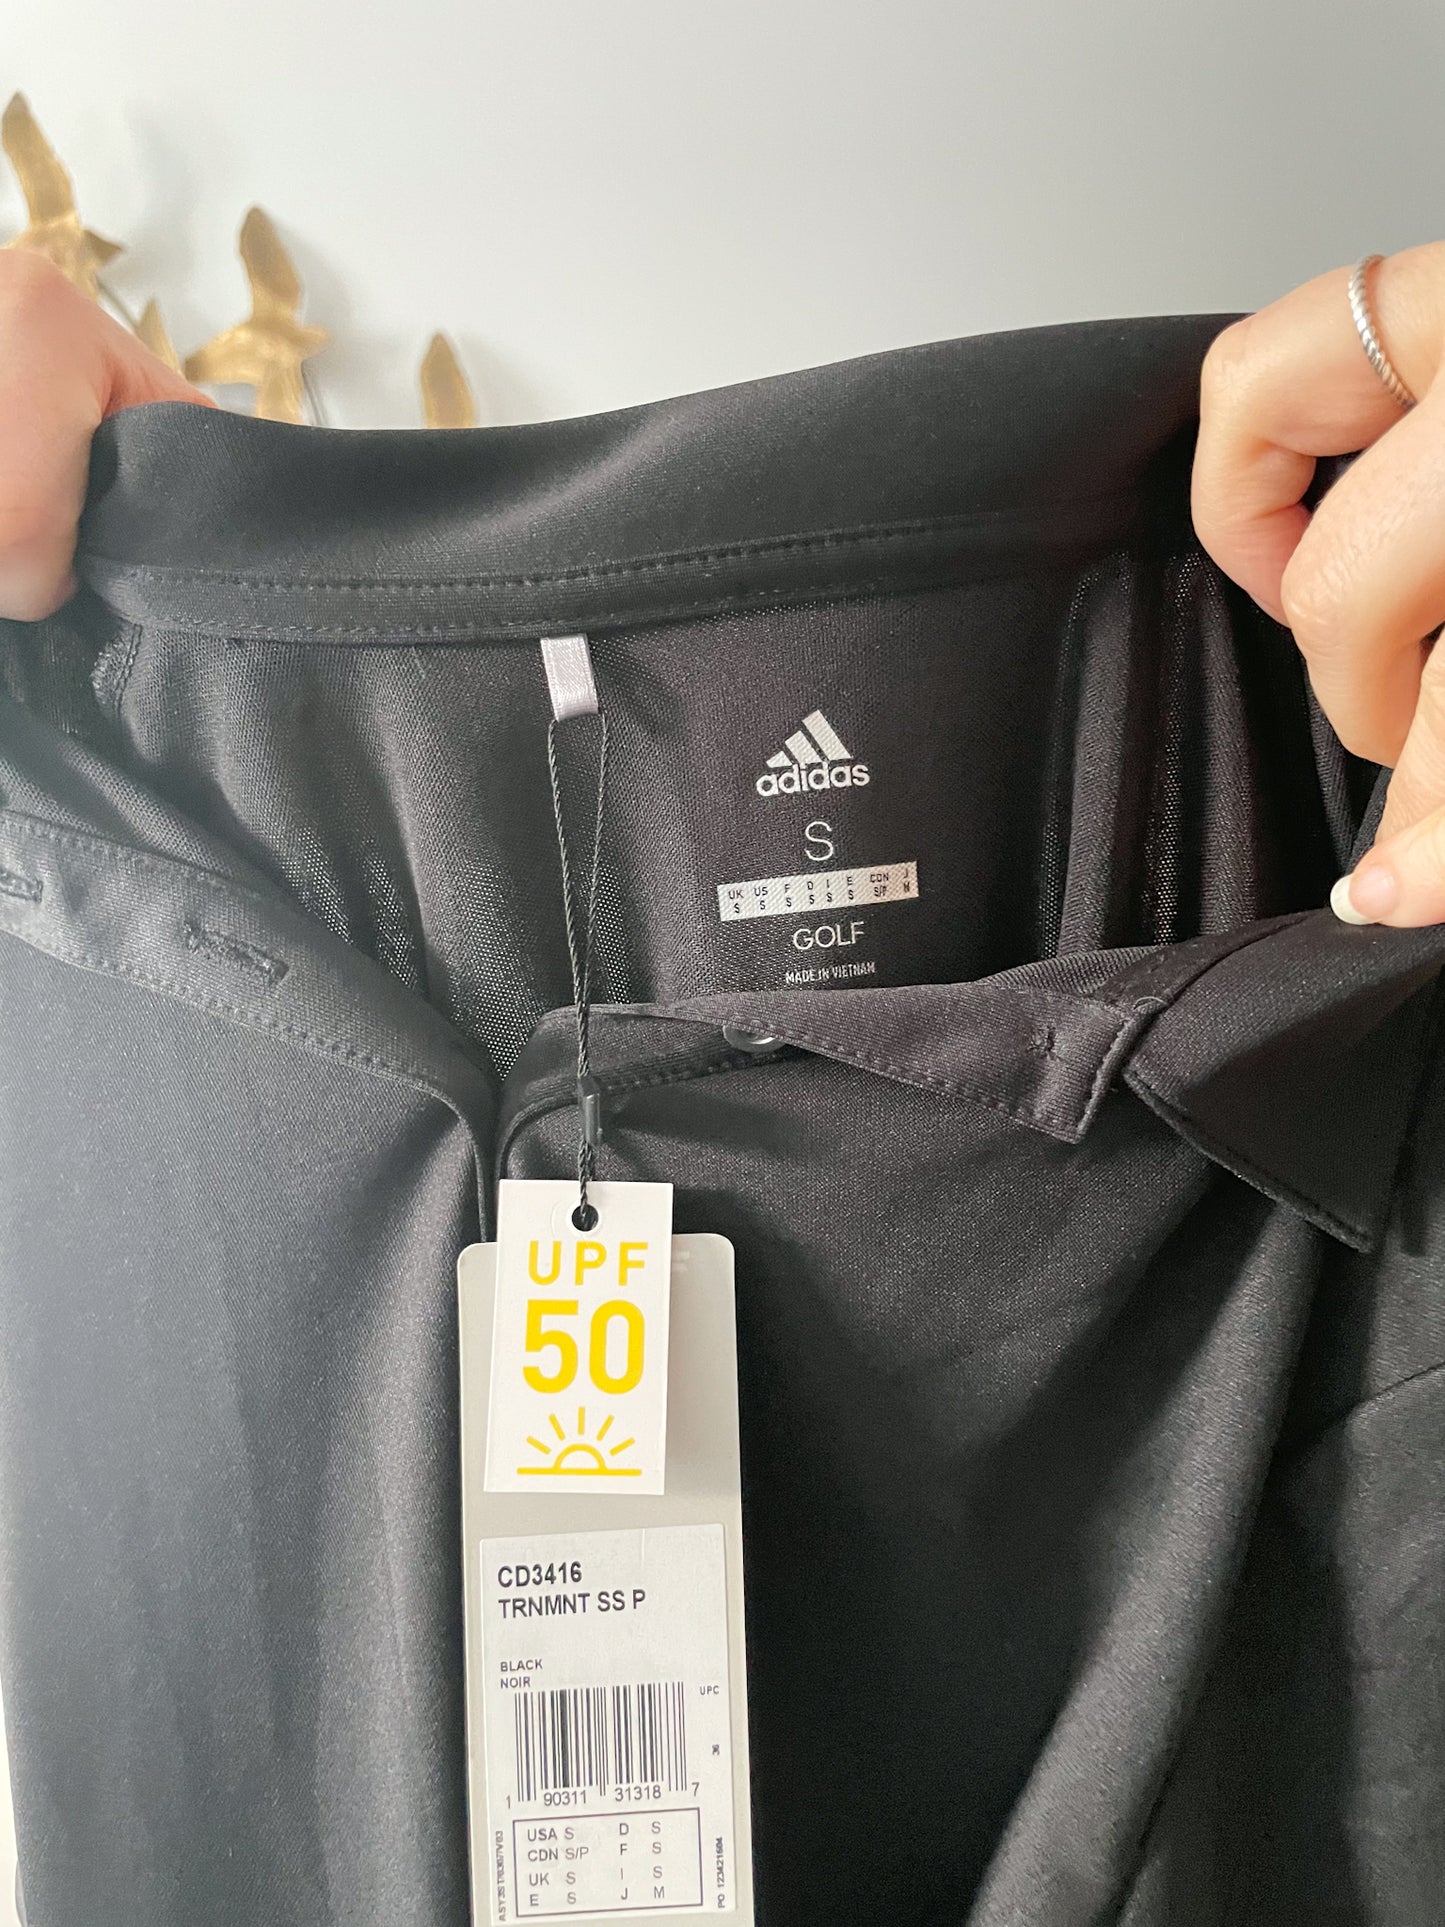 Adidas Black UPF50 Gold Polo Shirt - Small